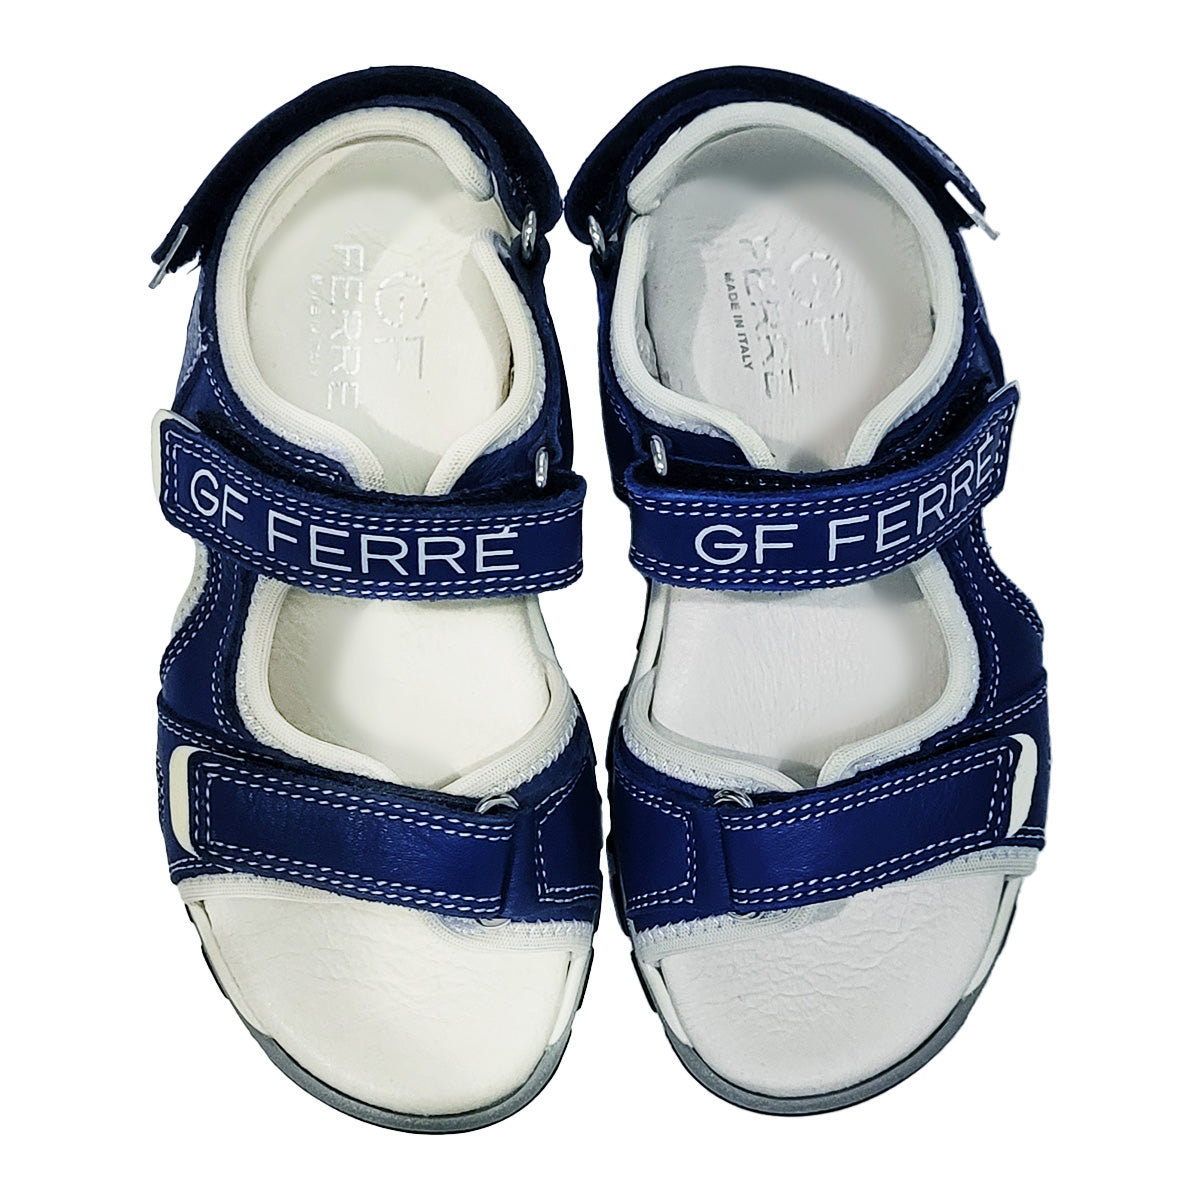 GF Ferre Sandal